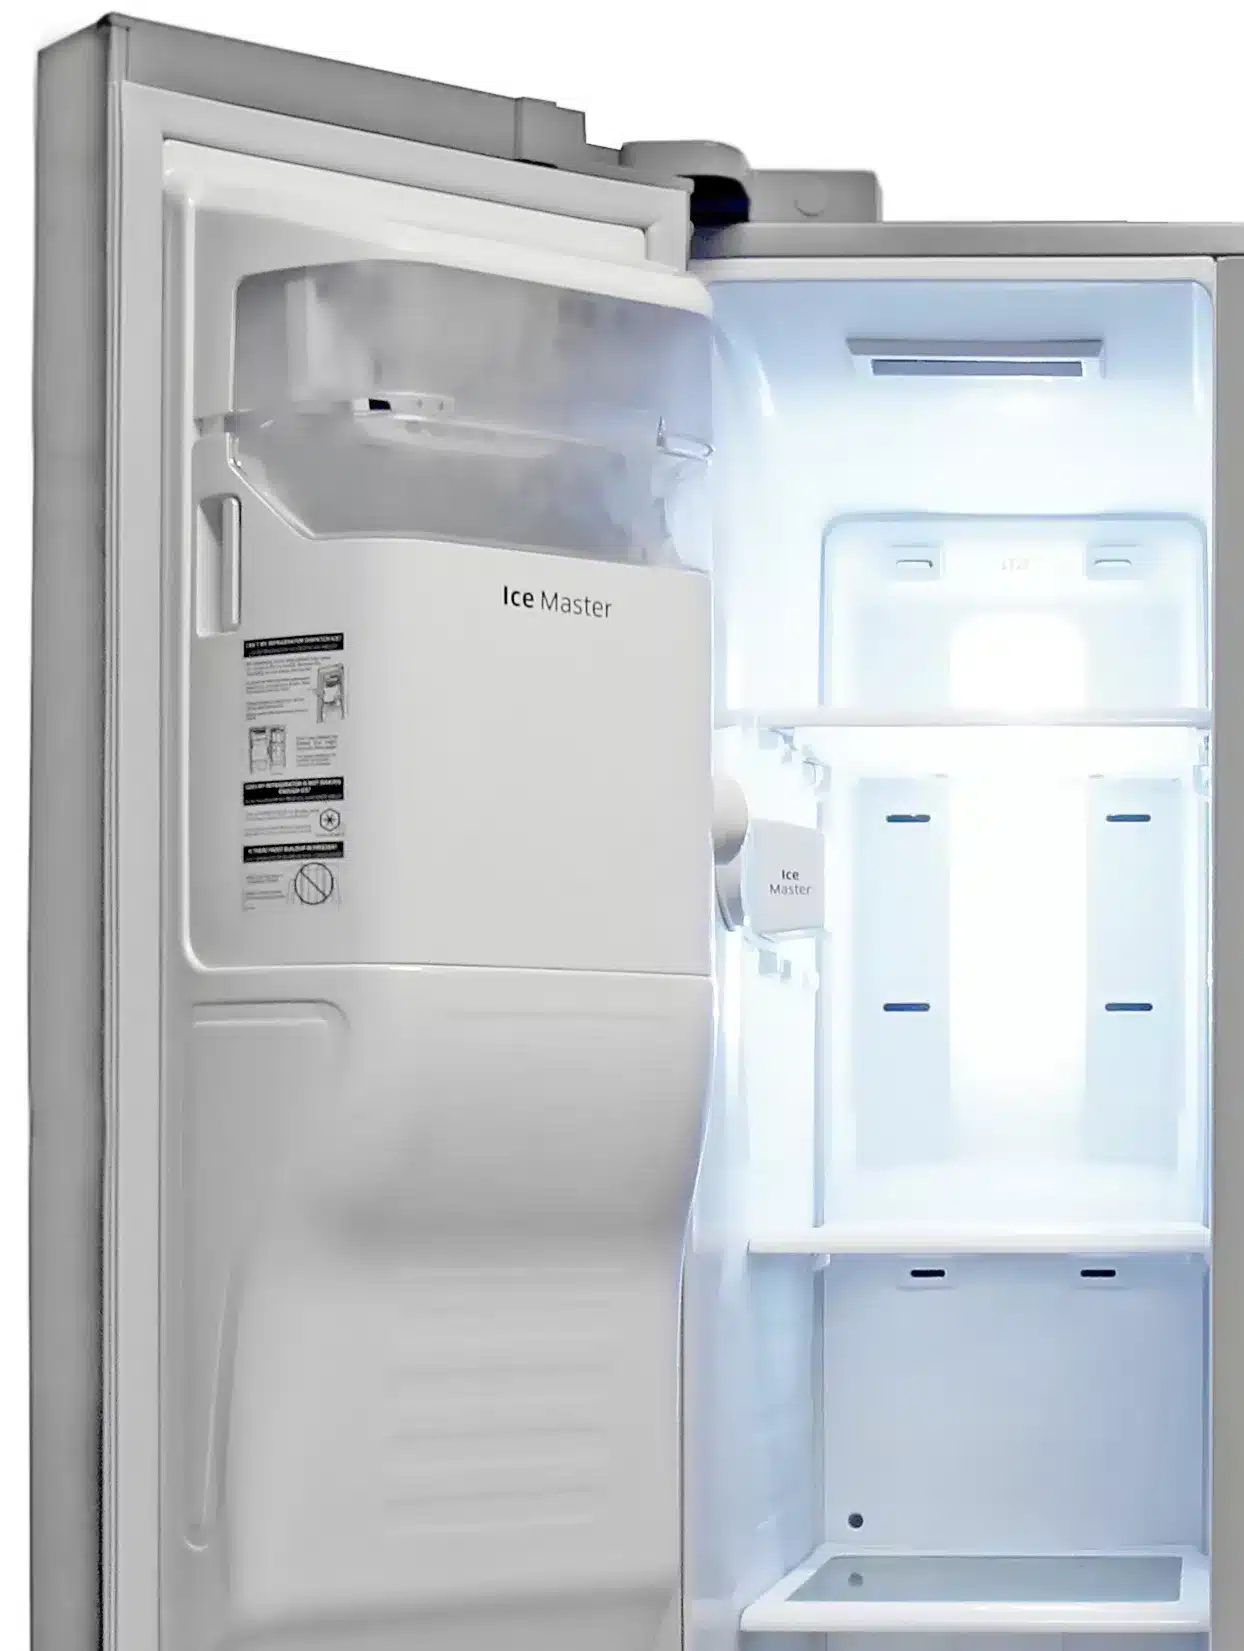 how-to-reset-a-samsung-fridge-ice-maker